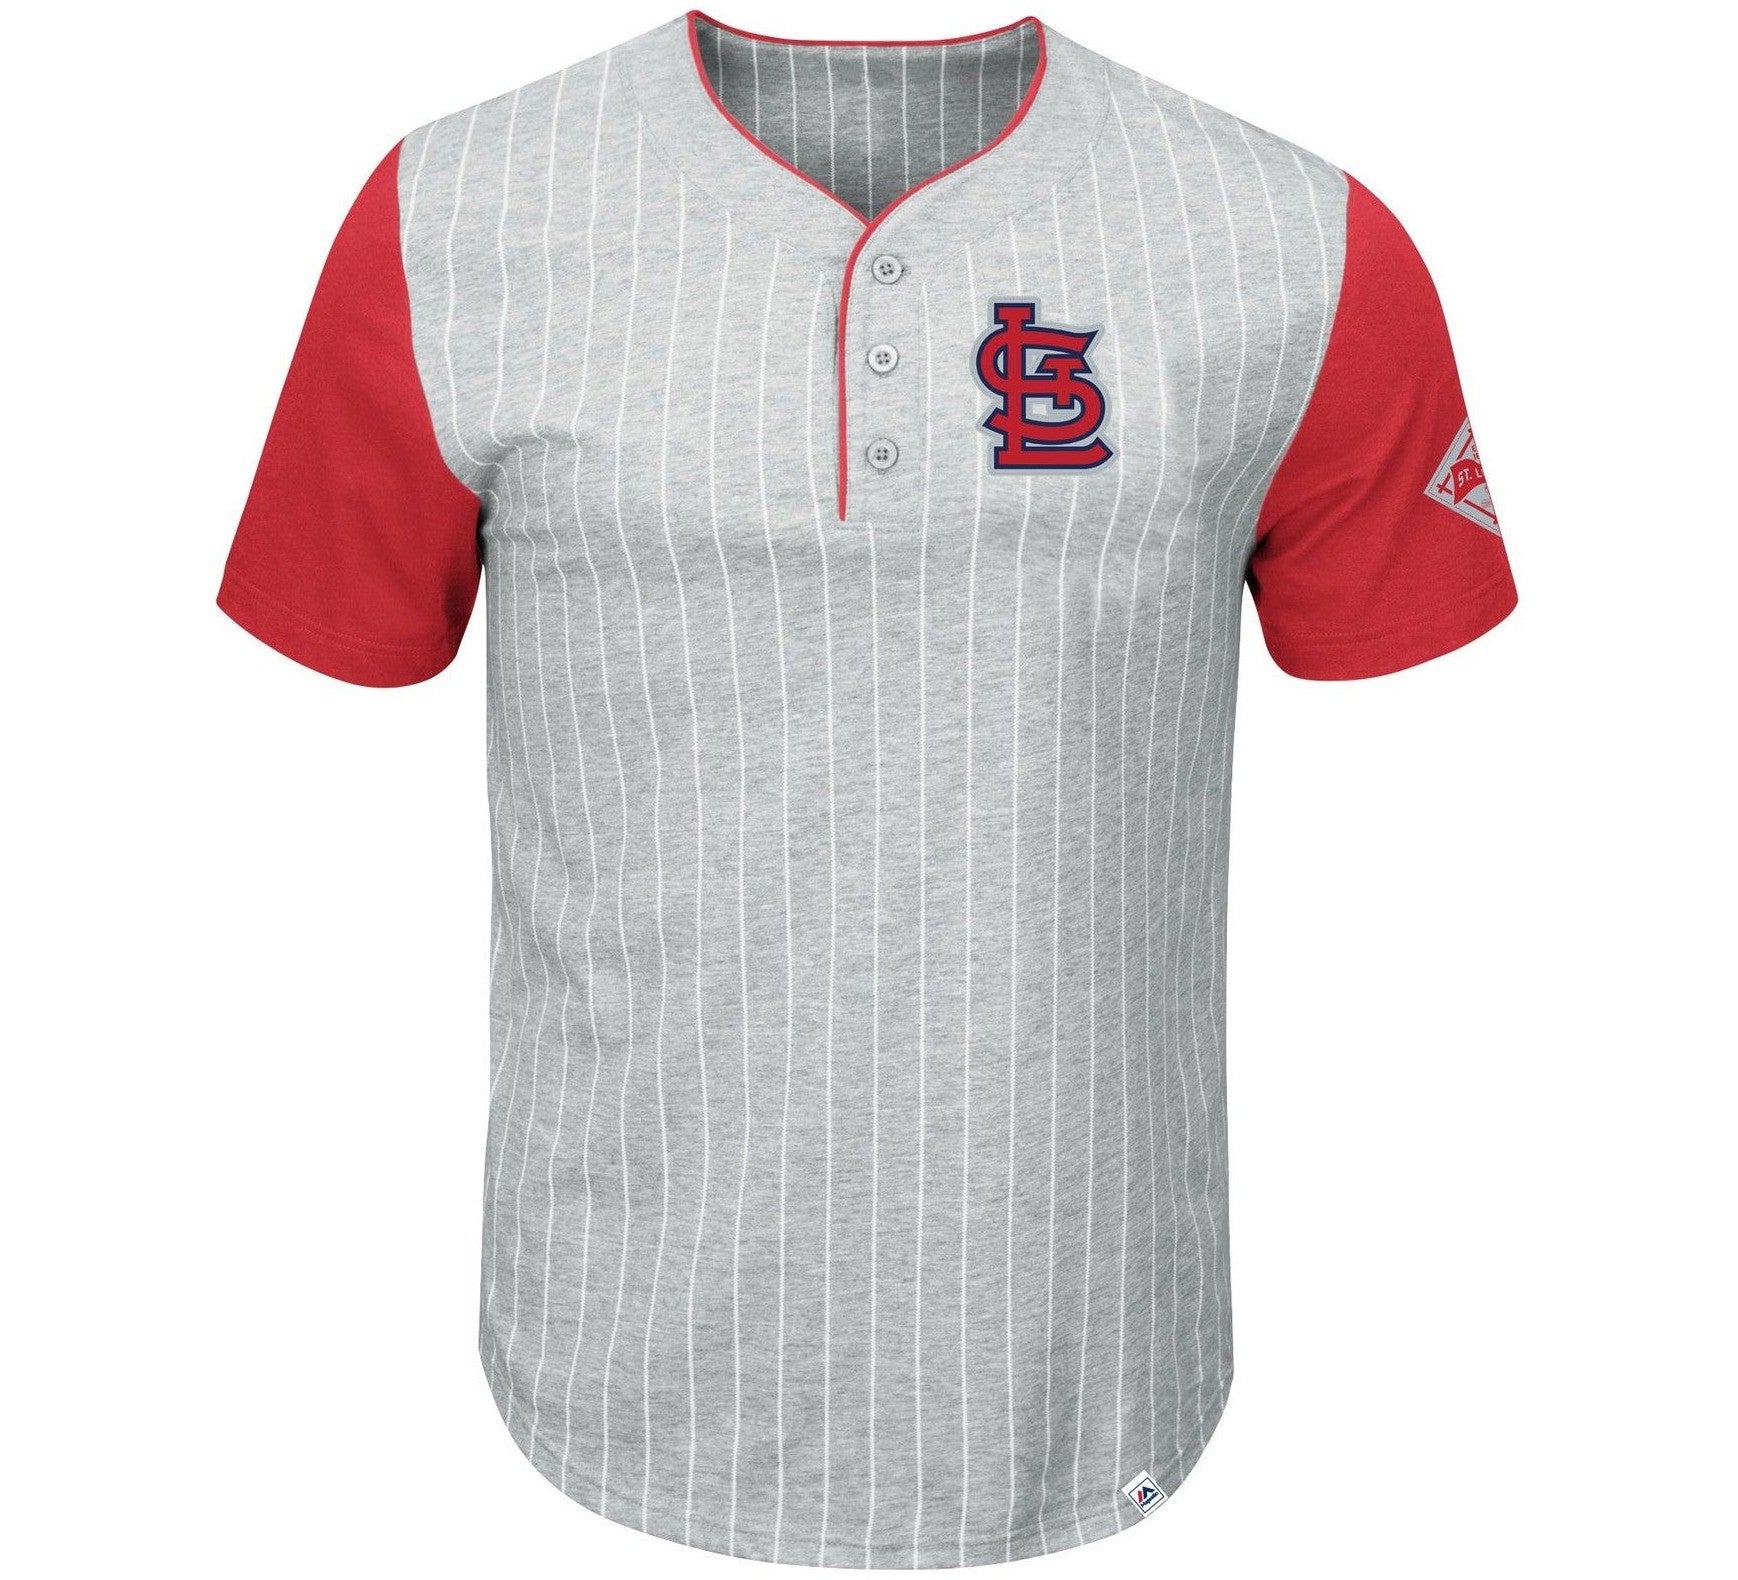 cardinals vintage jersey